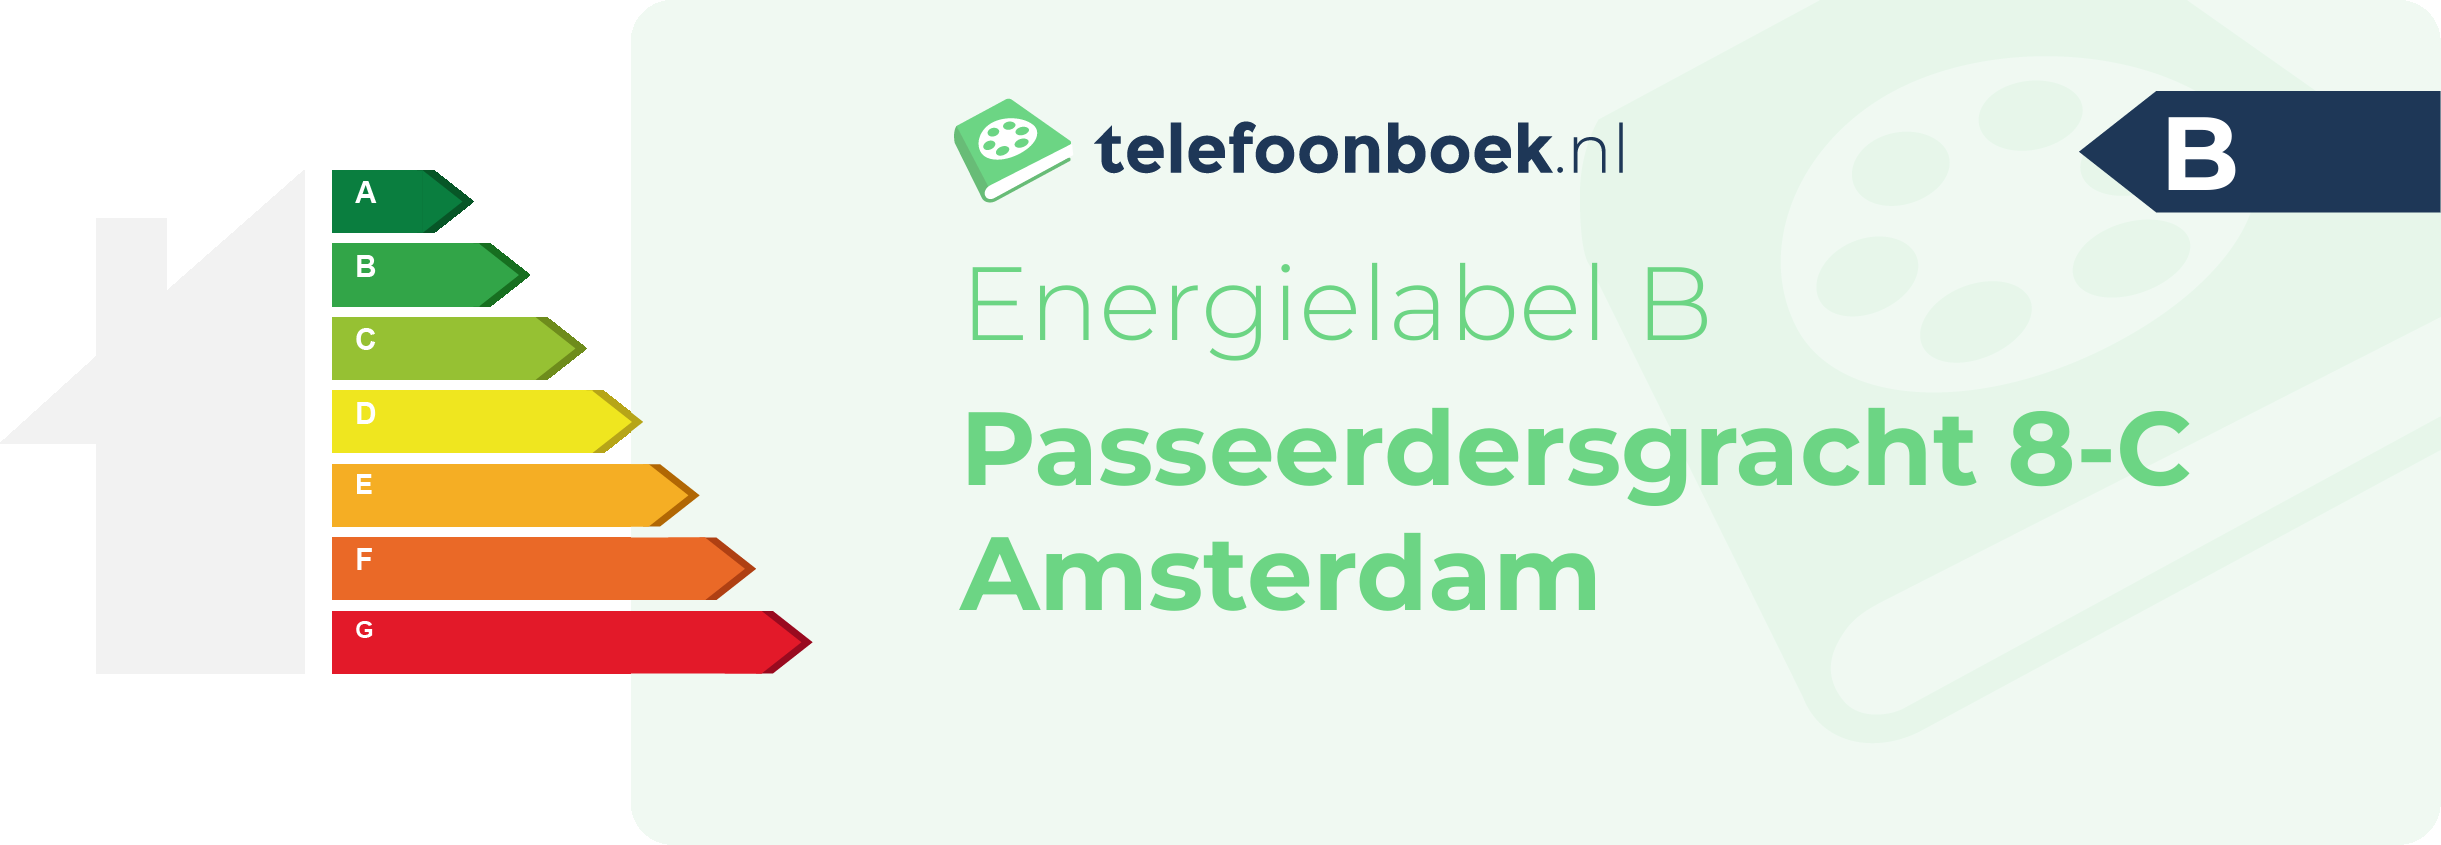 Energielabel Passeerdersgracht 8-C Amsterdam